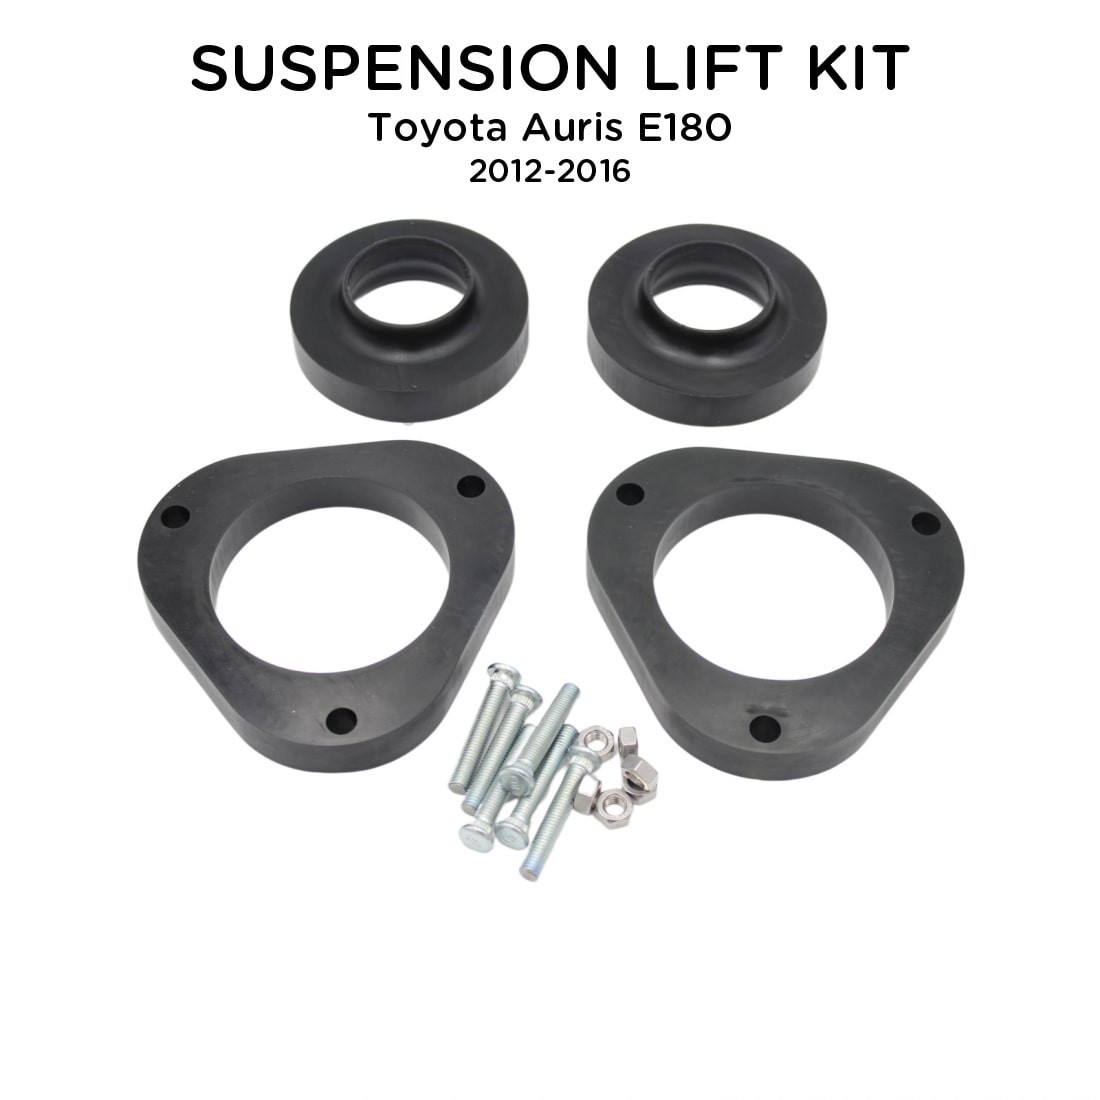 Suspension Lift Kit For Toyota Auris E180 2012-2016